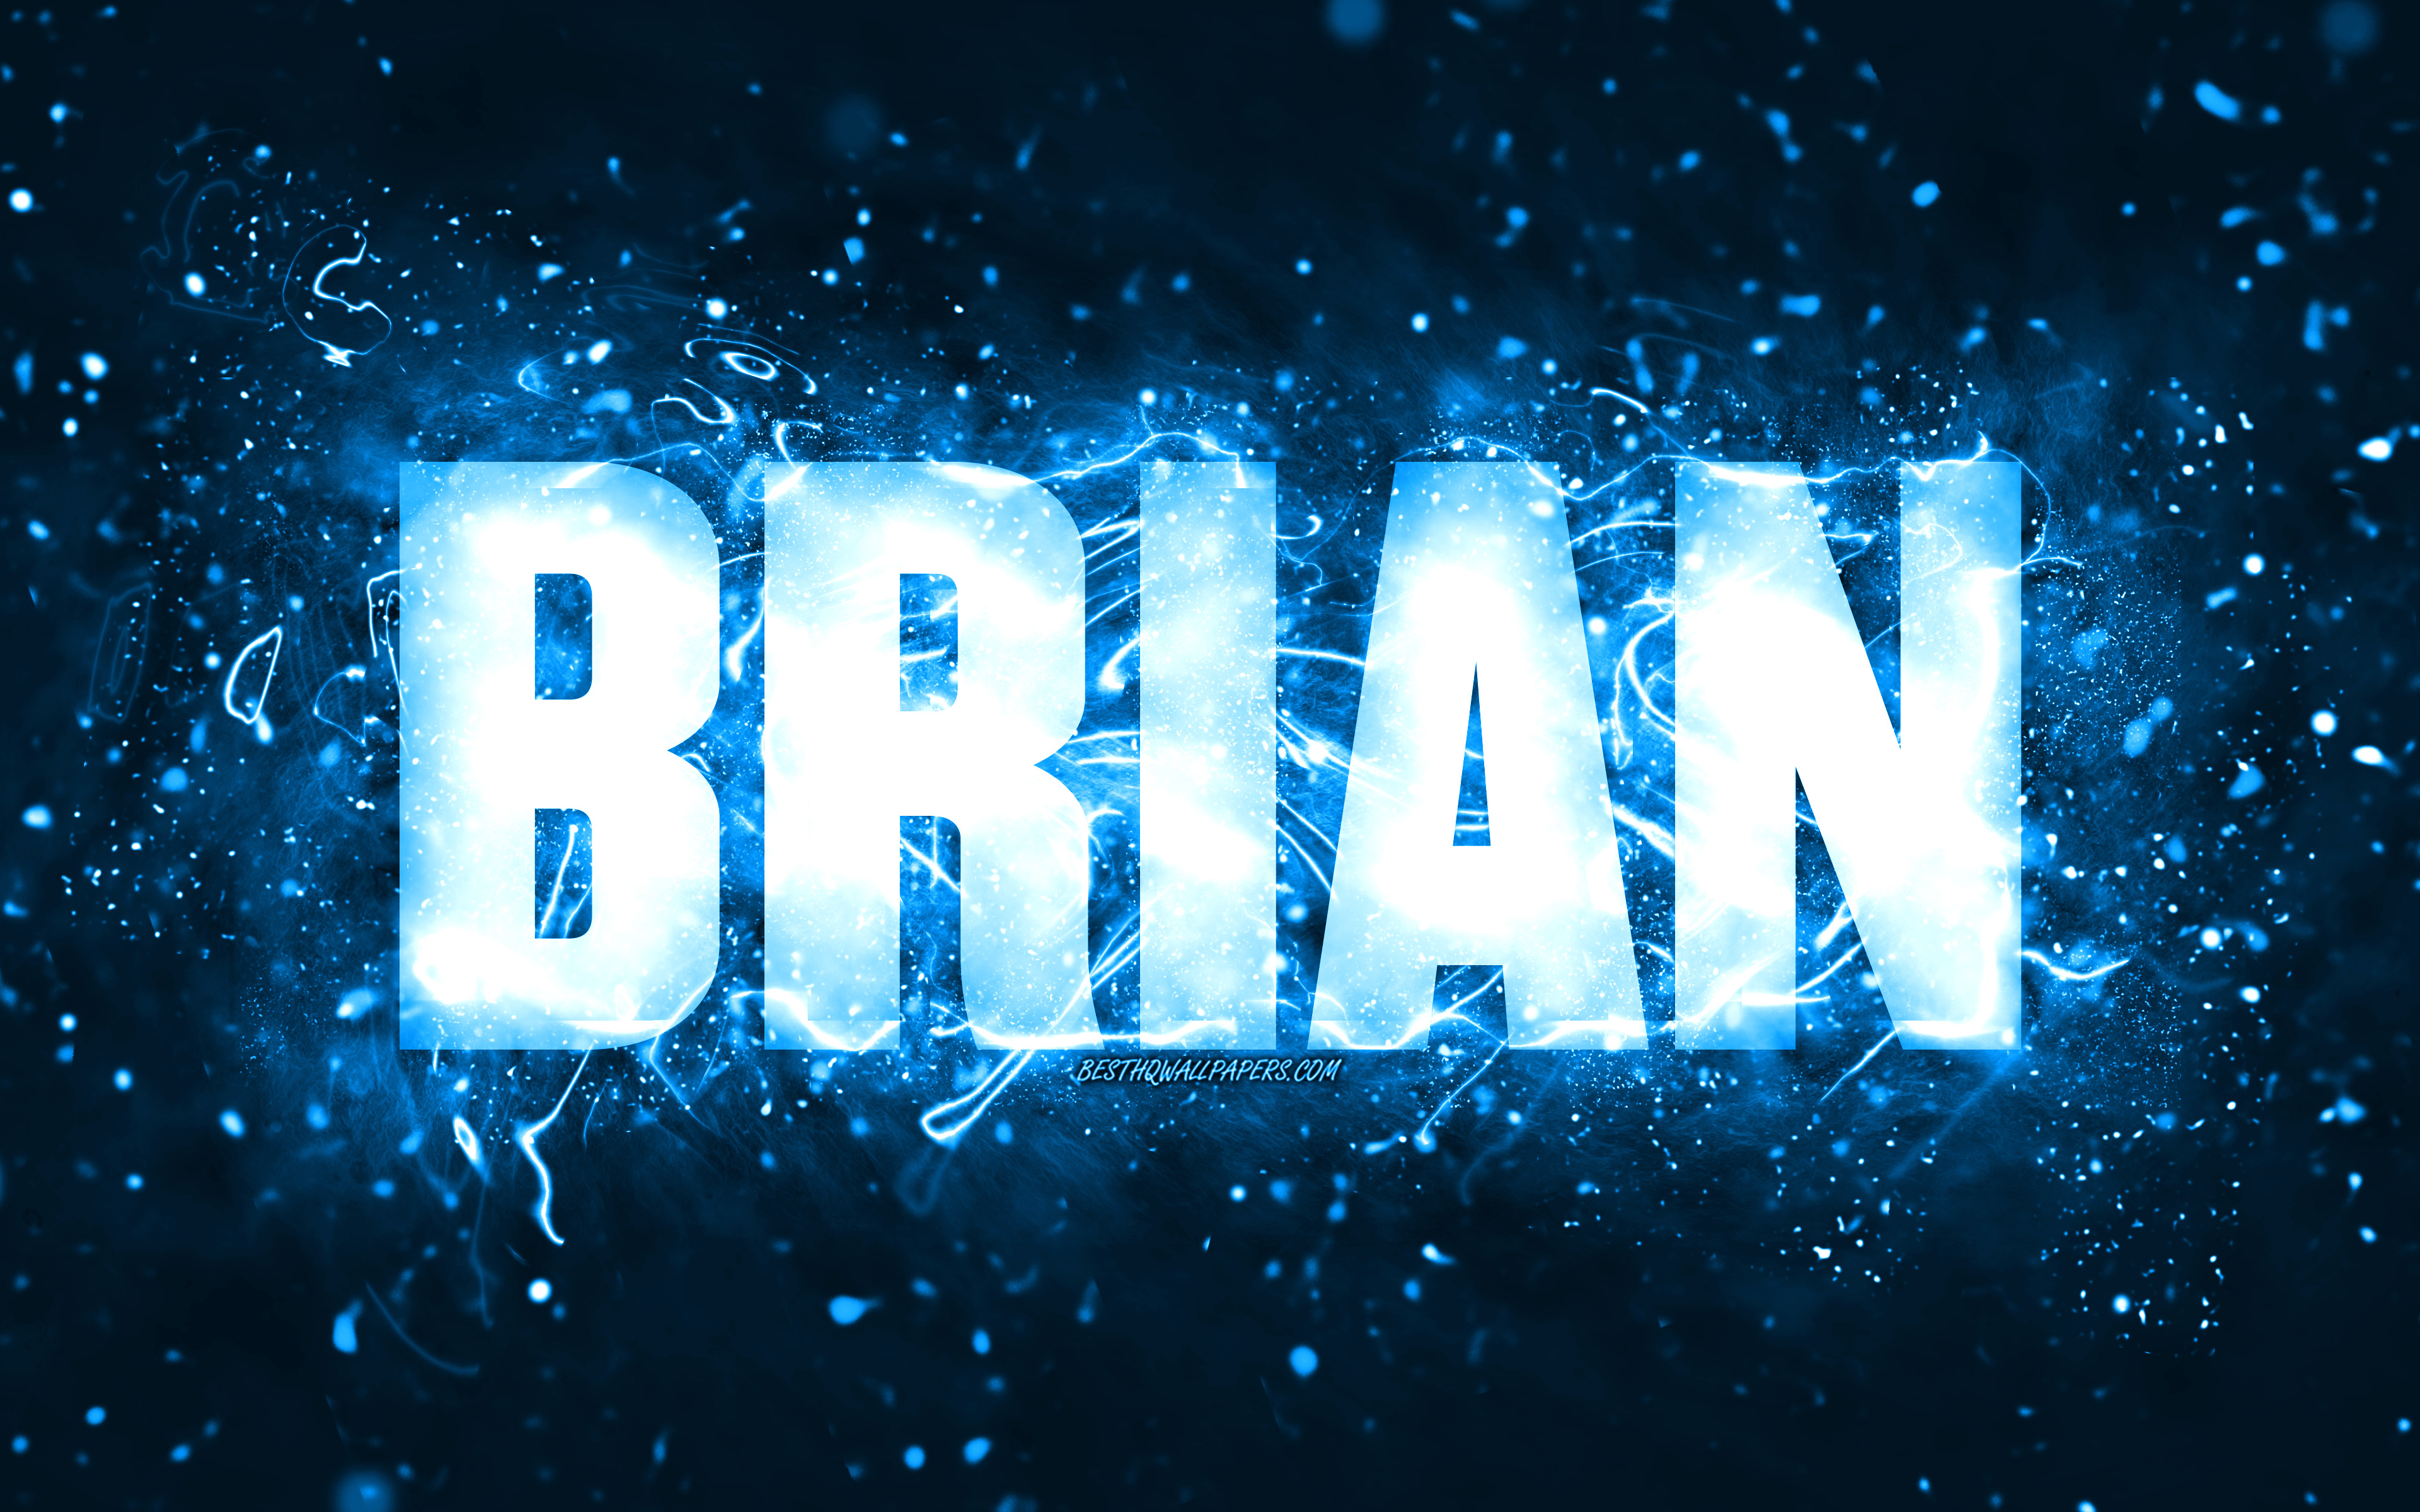 Brain name. Брайан Хэппи. Happy Birthday Brian.